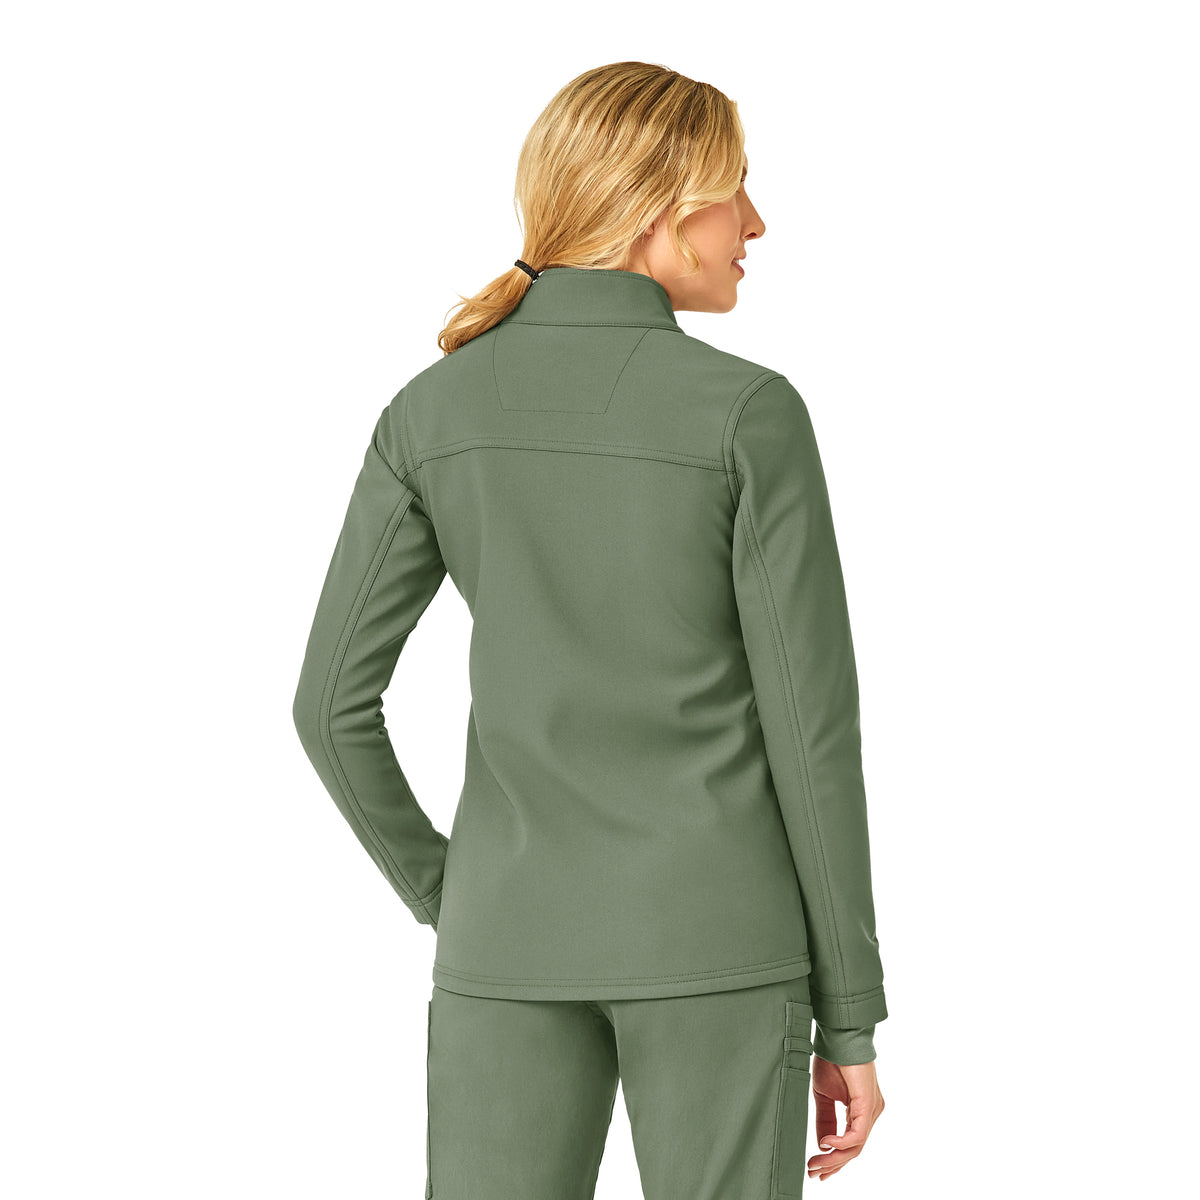 Rugged Flex Women's Bonded Fleece Jacket Olive back view